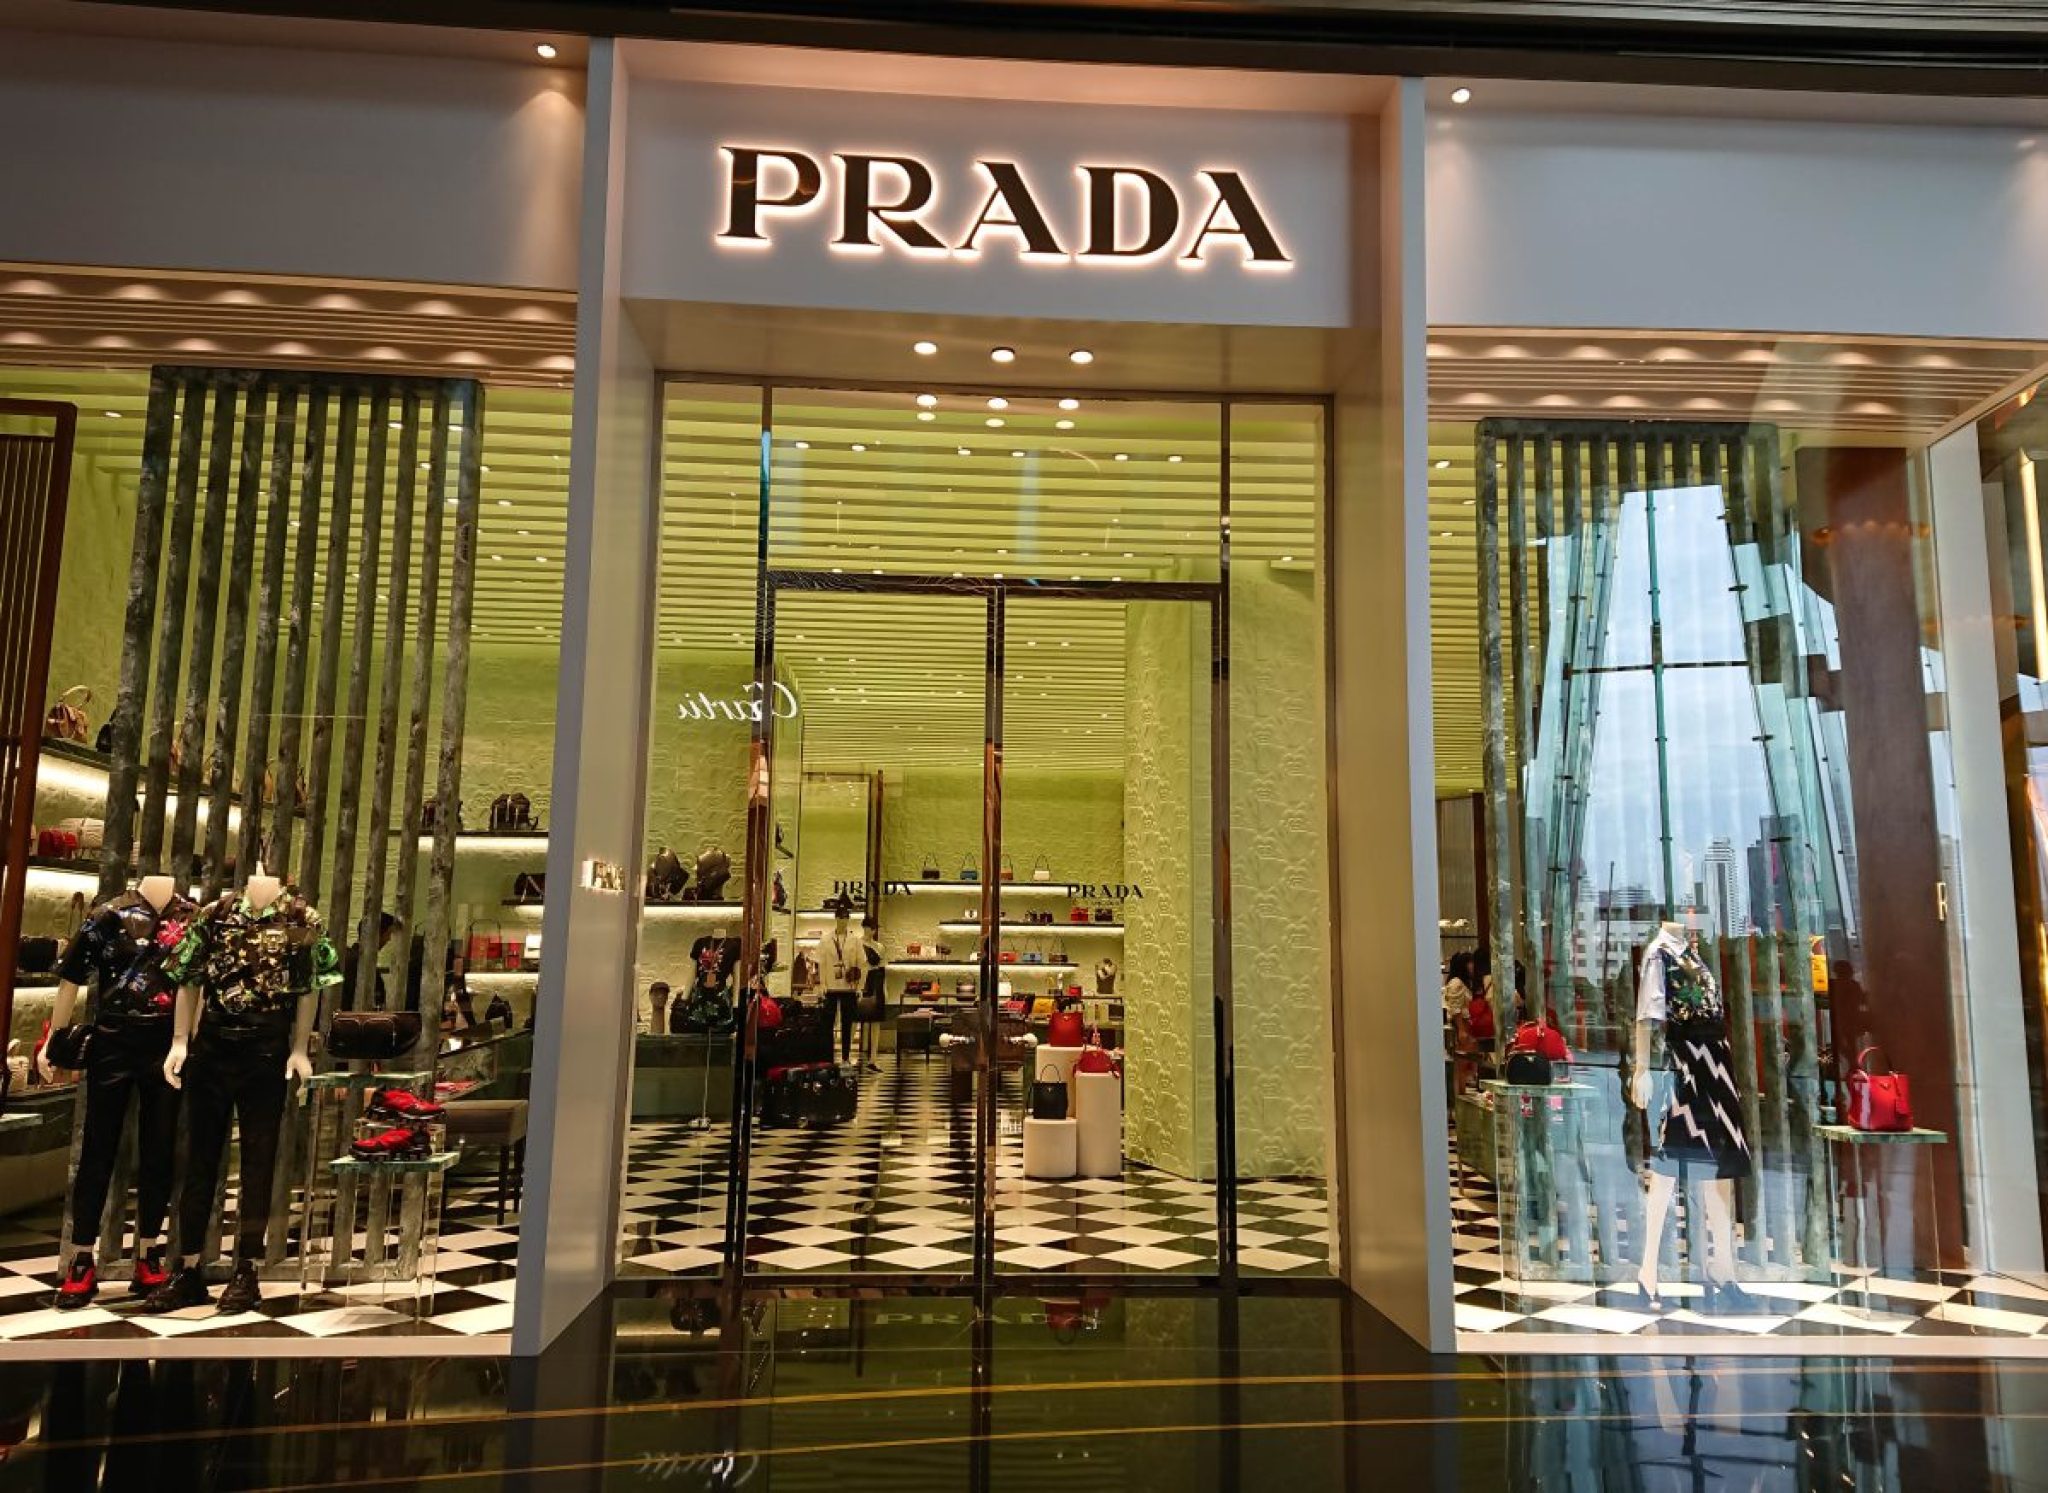 Prada Shoe Size Chart Are Prada Shoes Made In China? The Shoe Box NYC